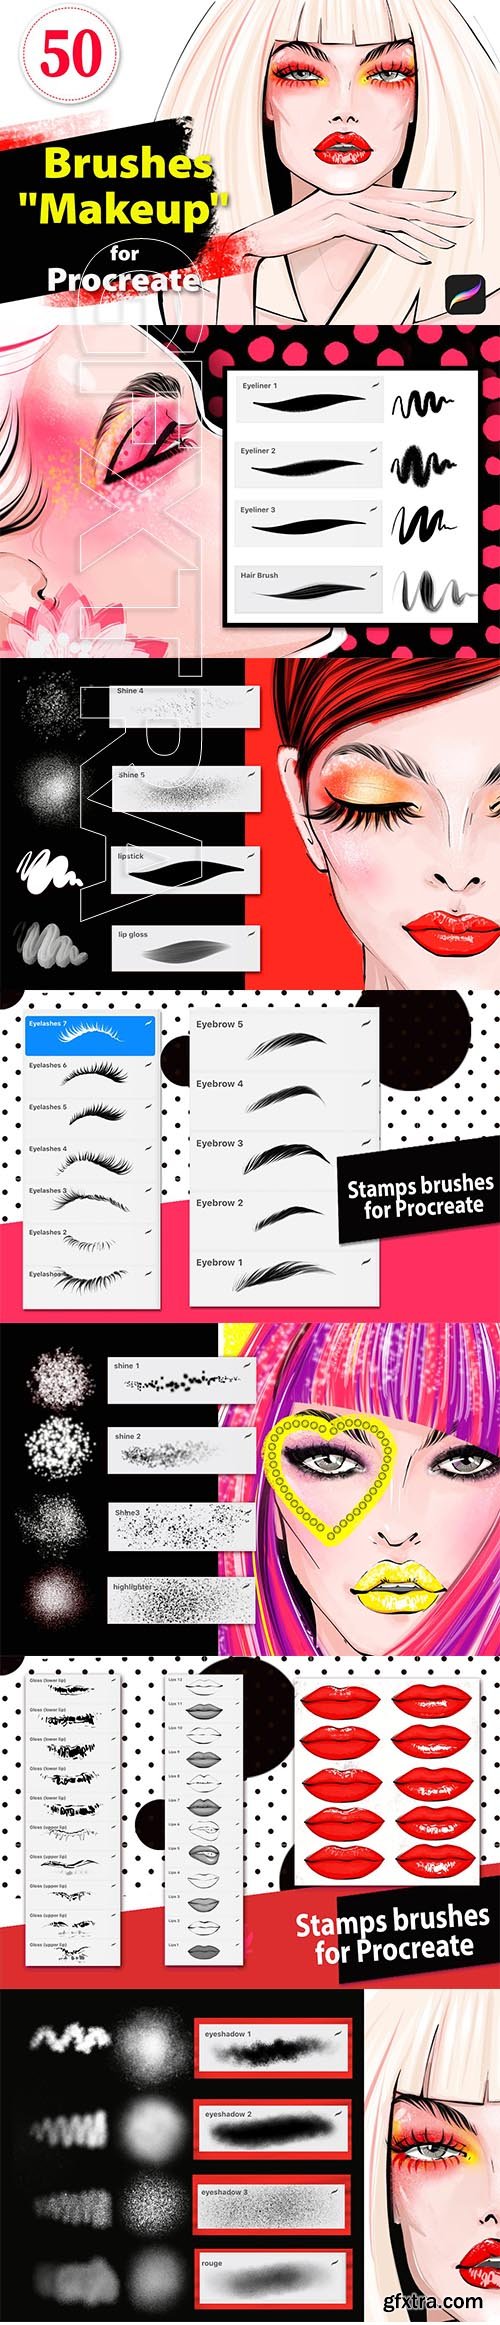 CreativeMarket - Makeup brush set for Procreate 3747548